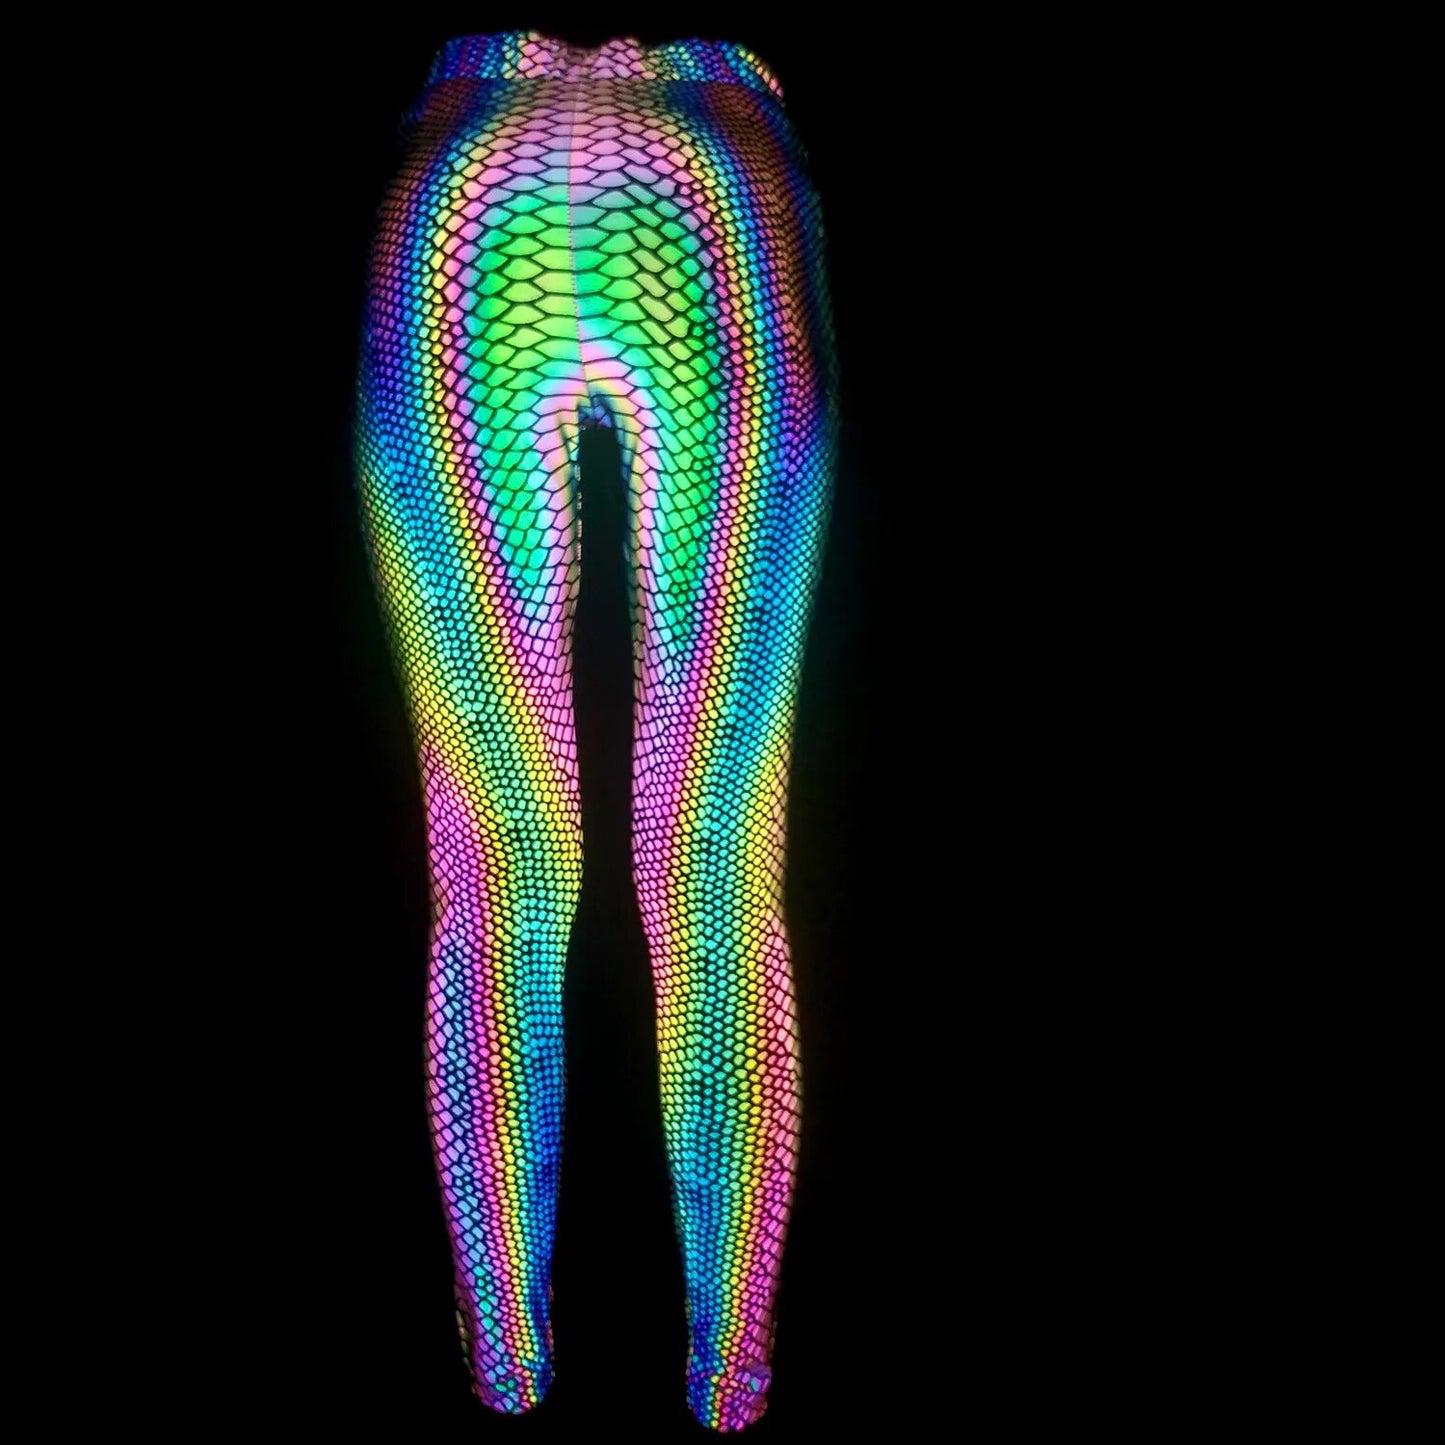 Women's Med Waist New Snakeskin Colorful Reflective Ankle Length Leggings Fitness Sports Hip Lift Elastic Pants Night Club Wear